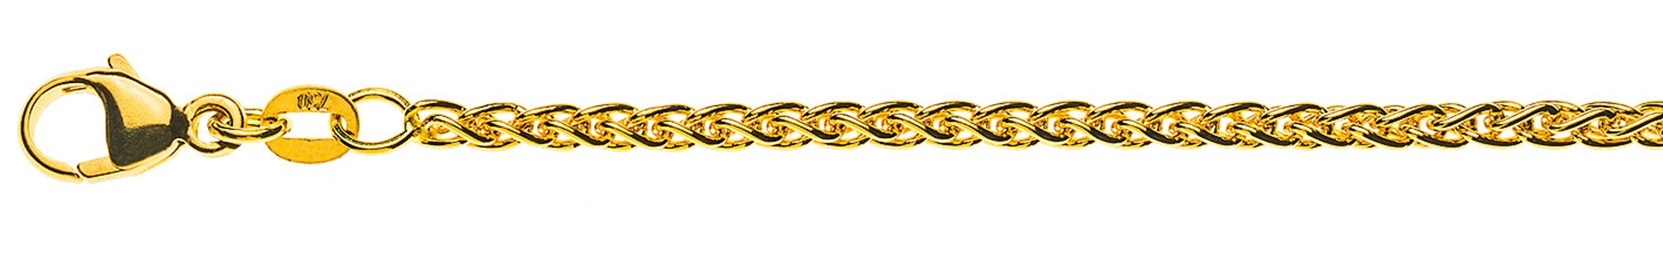 AURONOS Prestige Necklace yellow gold 18K cable chain 60cm 2.5mm